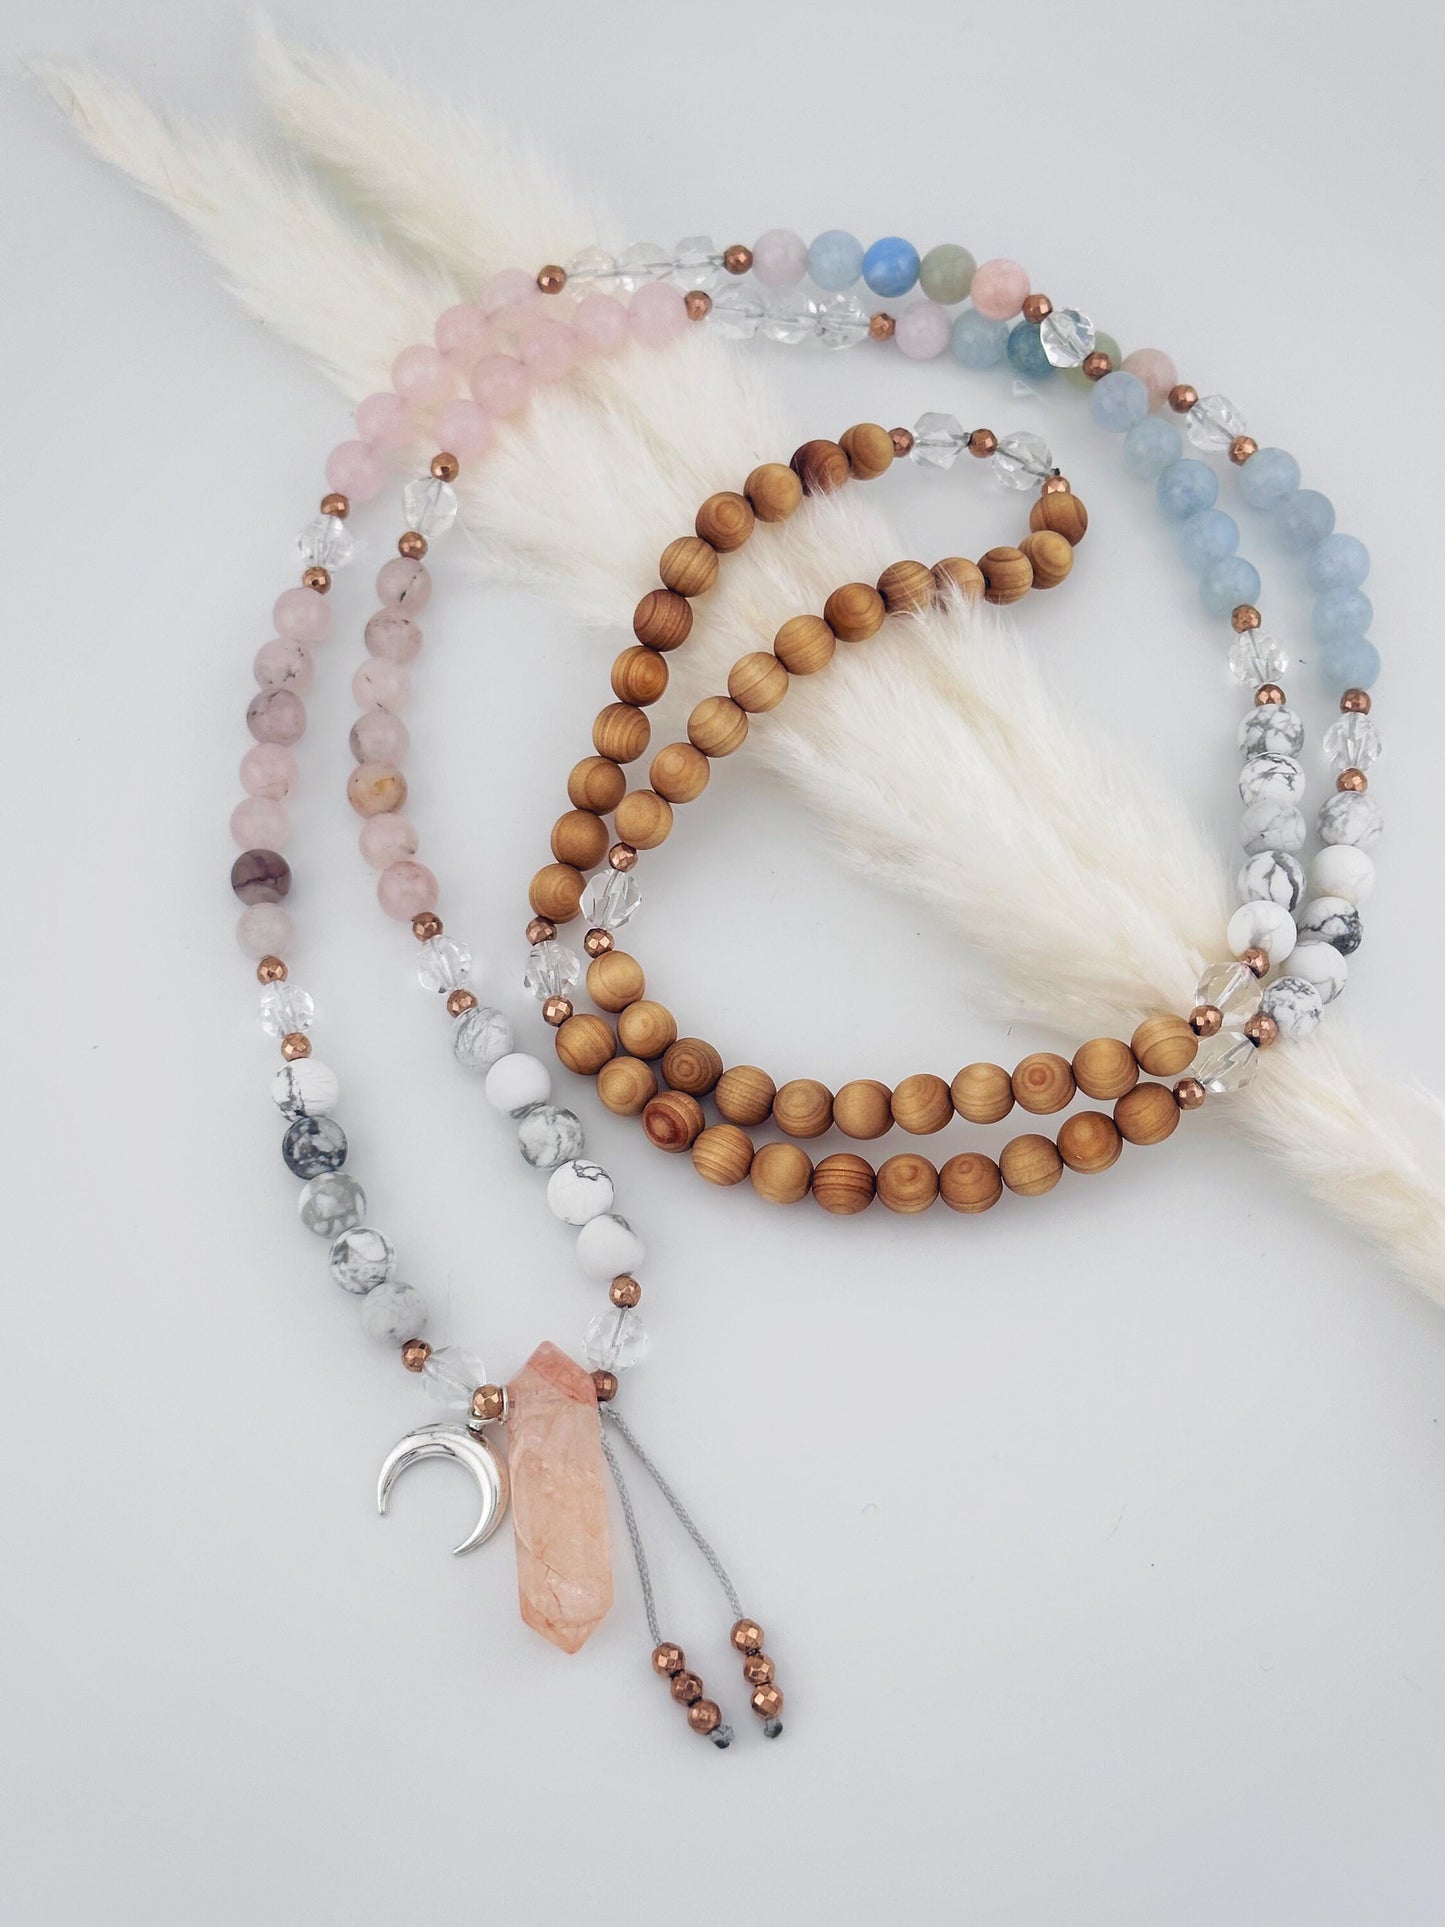 Emotional trauma healing Gemstone mala breakup recovery tool wood Mala necklace layered bracelet jewelry gift for her meditation yoga supply